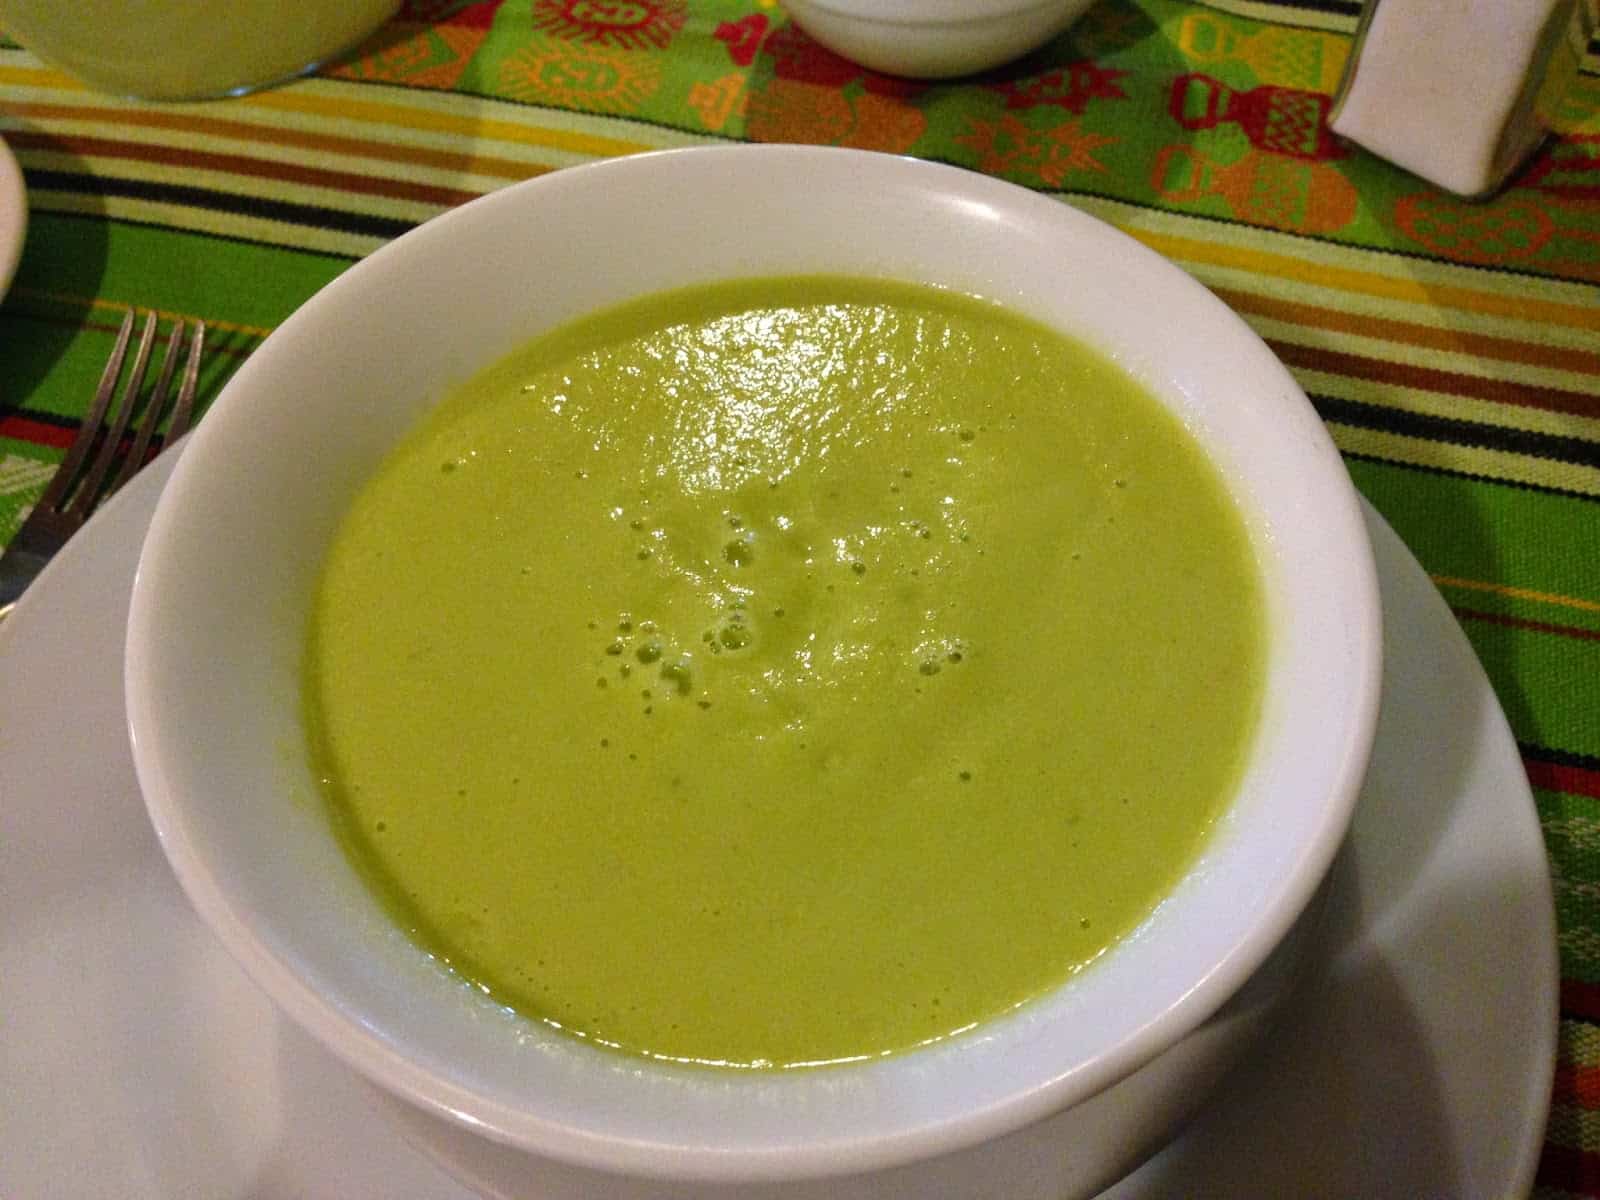 Avocado soup at Mi Otavalito in Otavalo, Ecuador